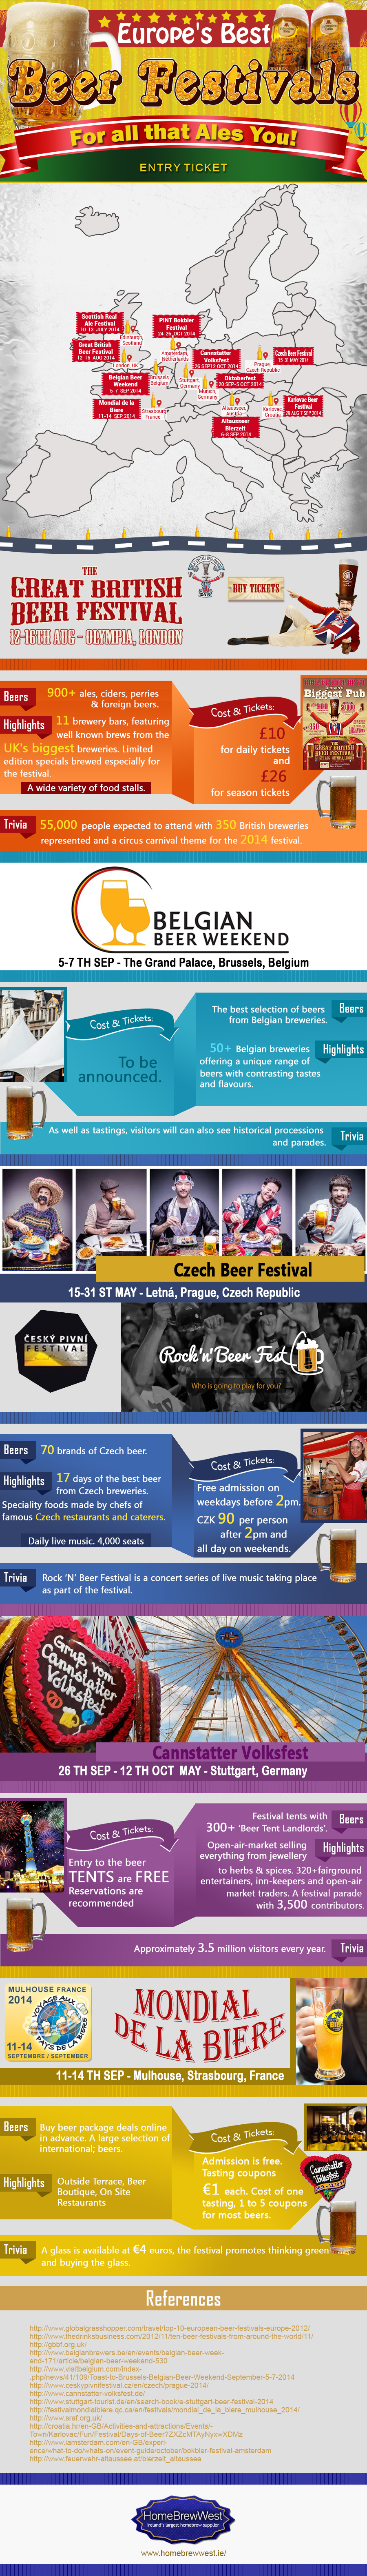 The Biggest Beer Festivals in Europe